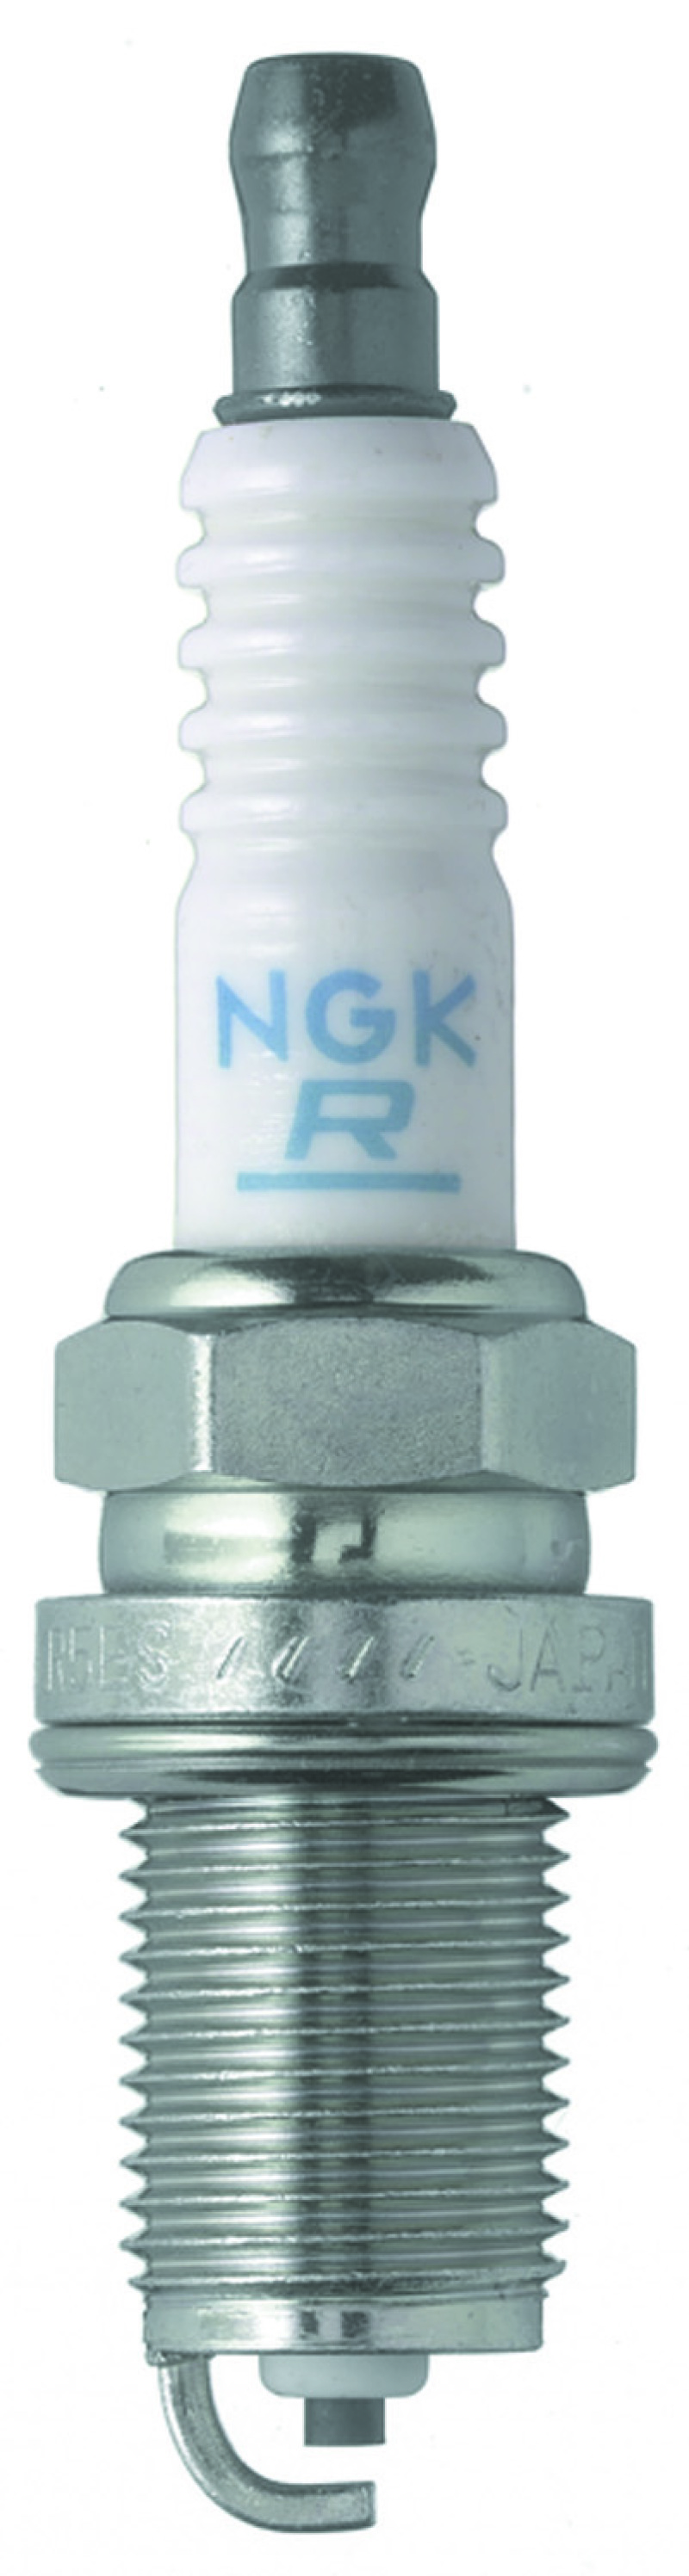 NGK V-Power Spark Plug Box of 4 (FR5) - 7373